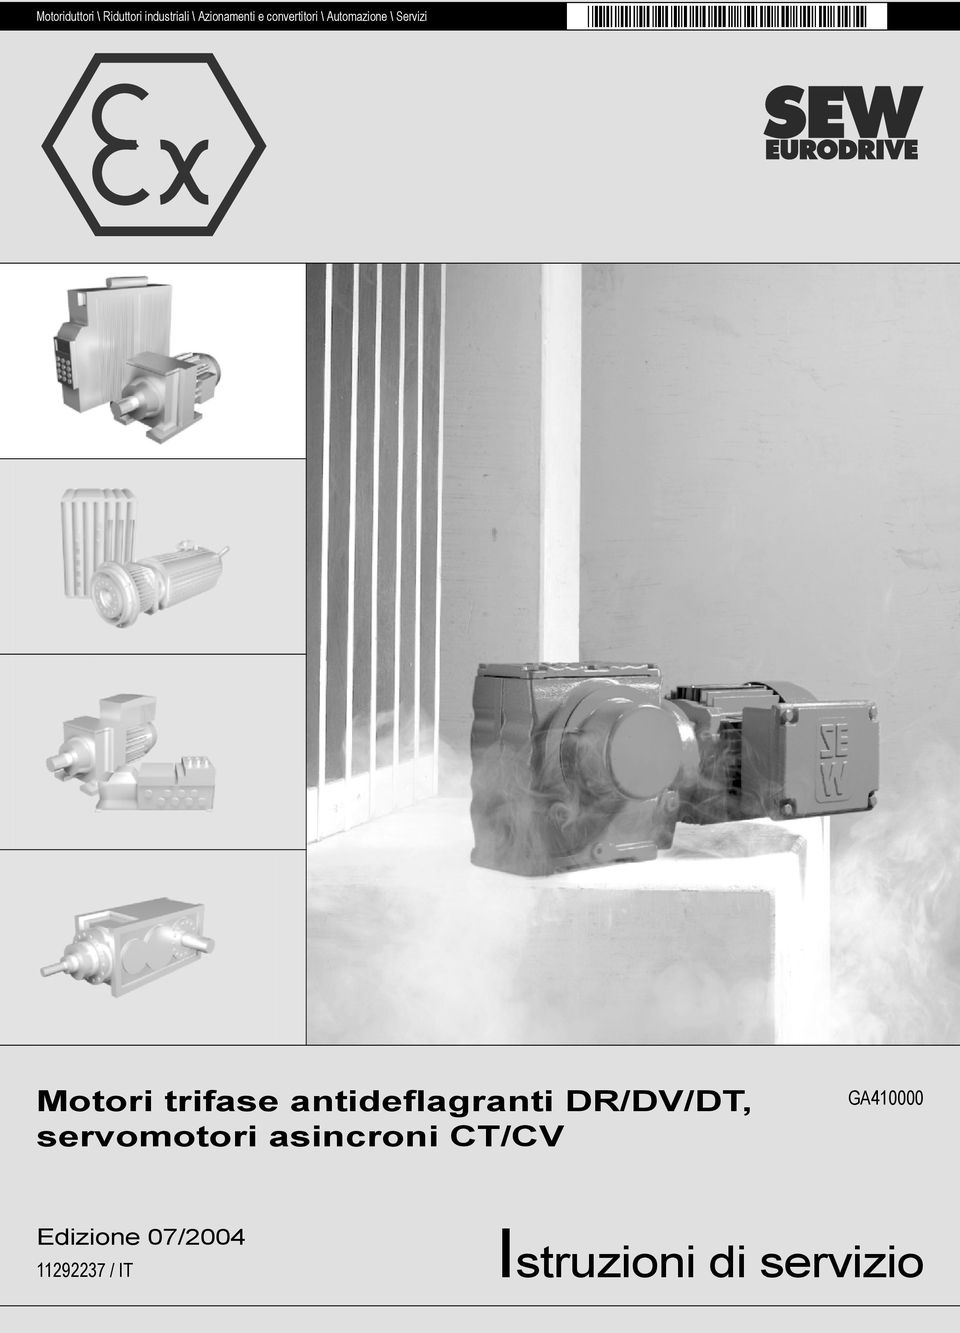 antideflagranti DR/DV/DT, servomotori asincroni CT/CV